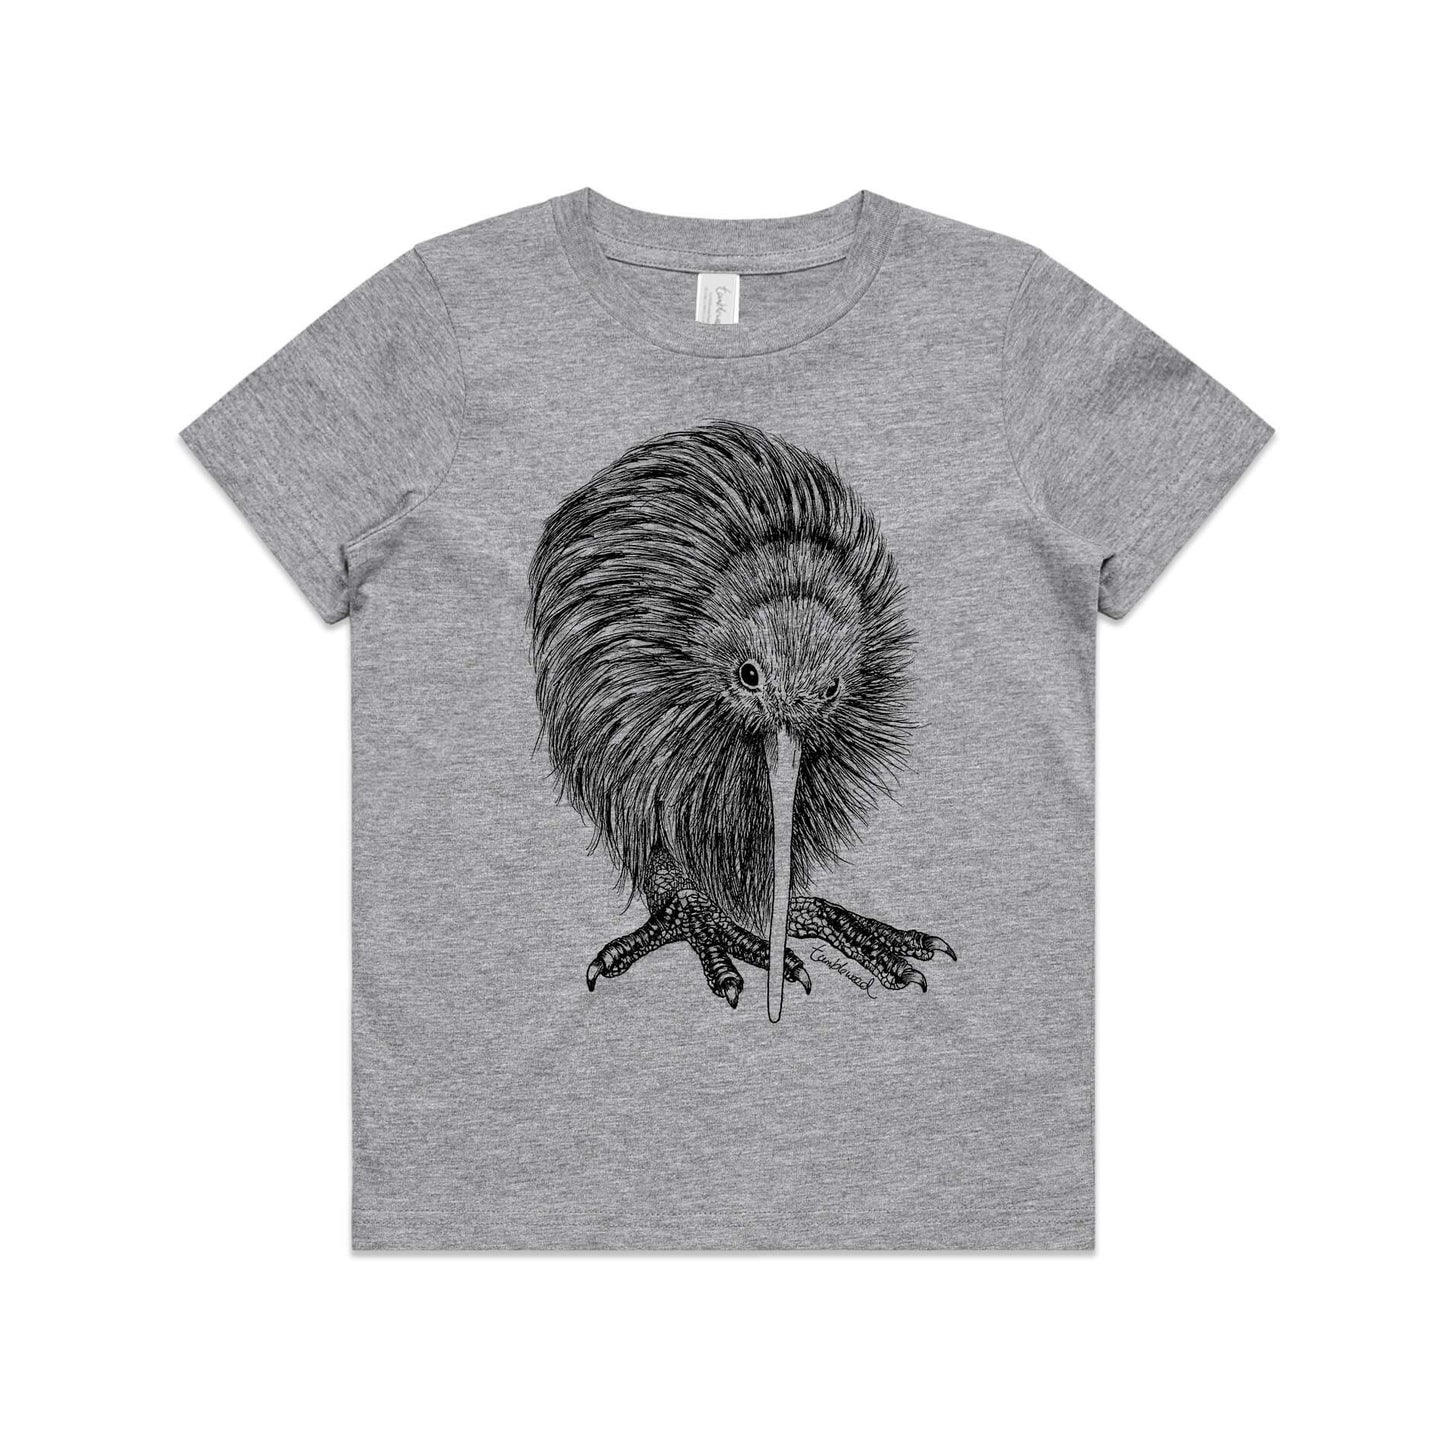 Grey marle, cotton kids' t-shirt with screen printed Kids kiwi design.